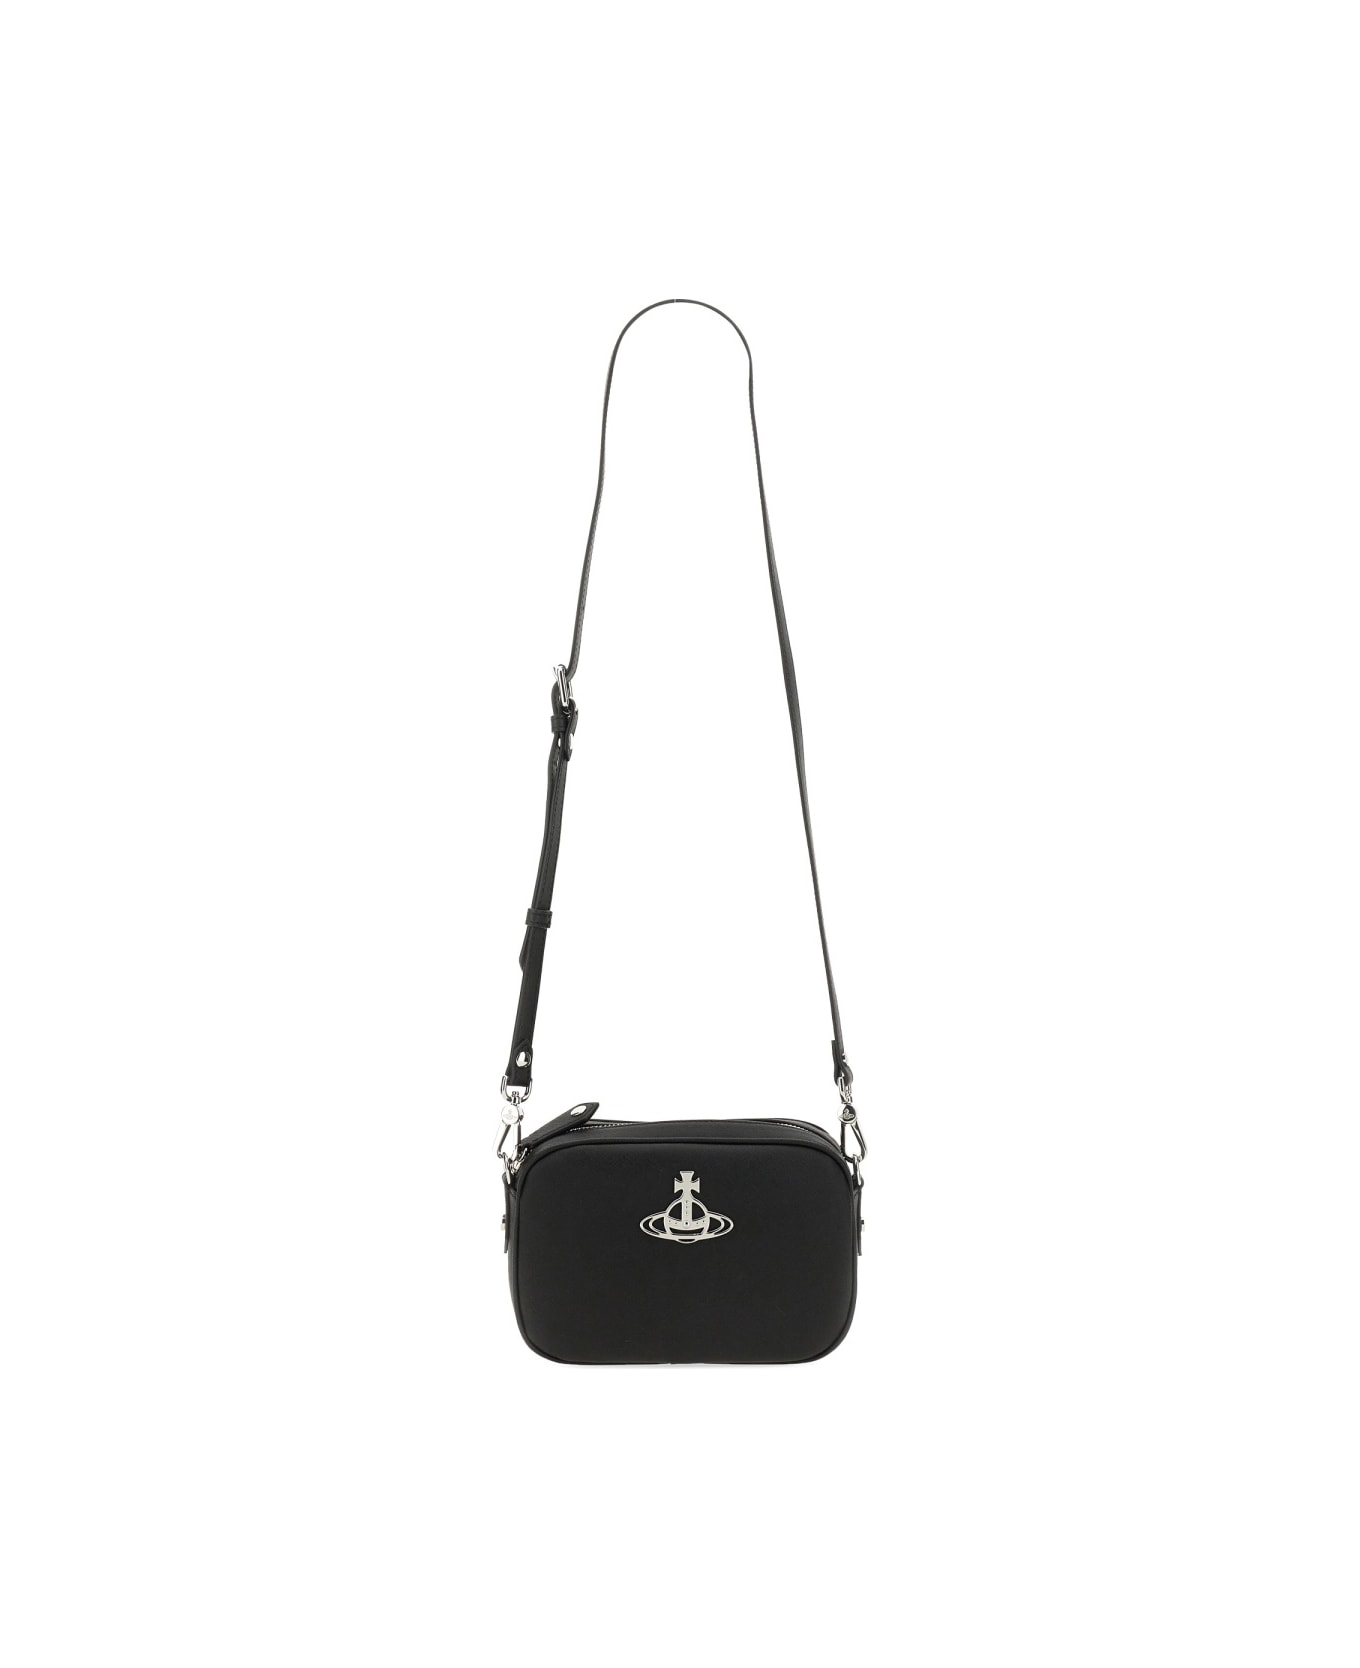 Vivienne Westwood Room Bag "anna" - BLACK